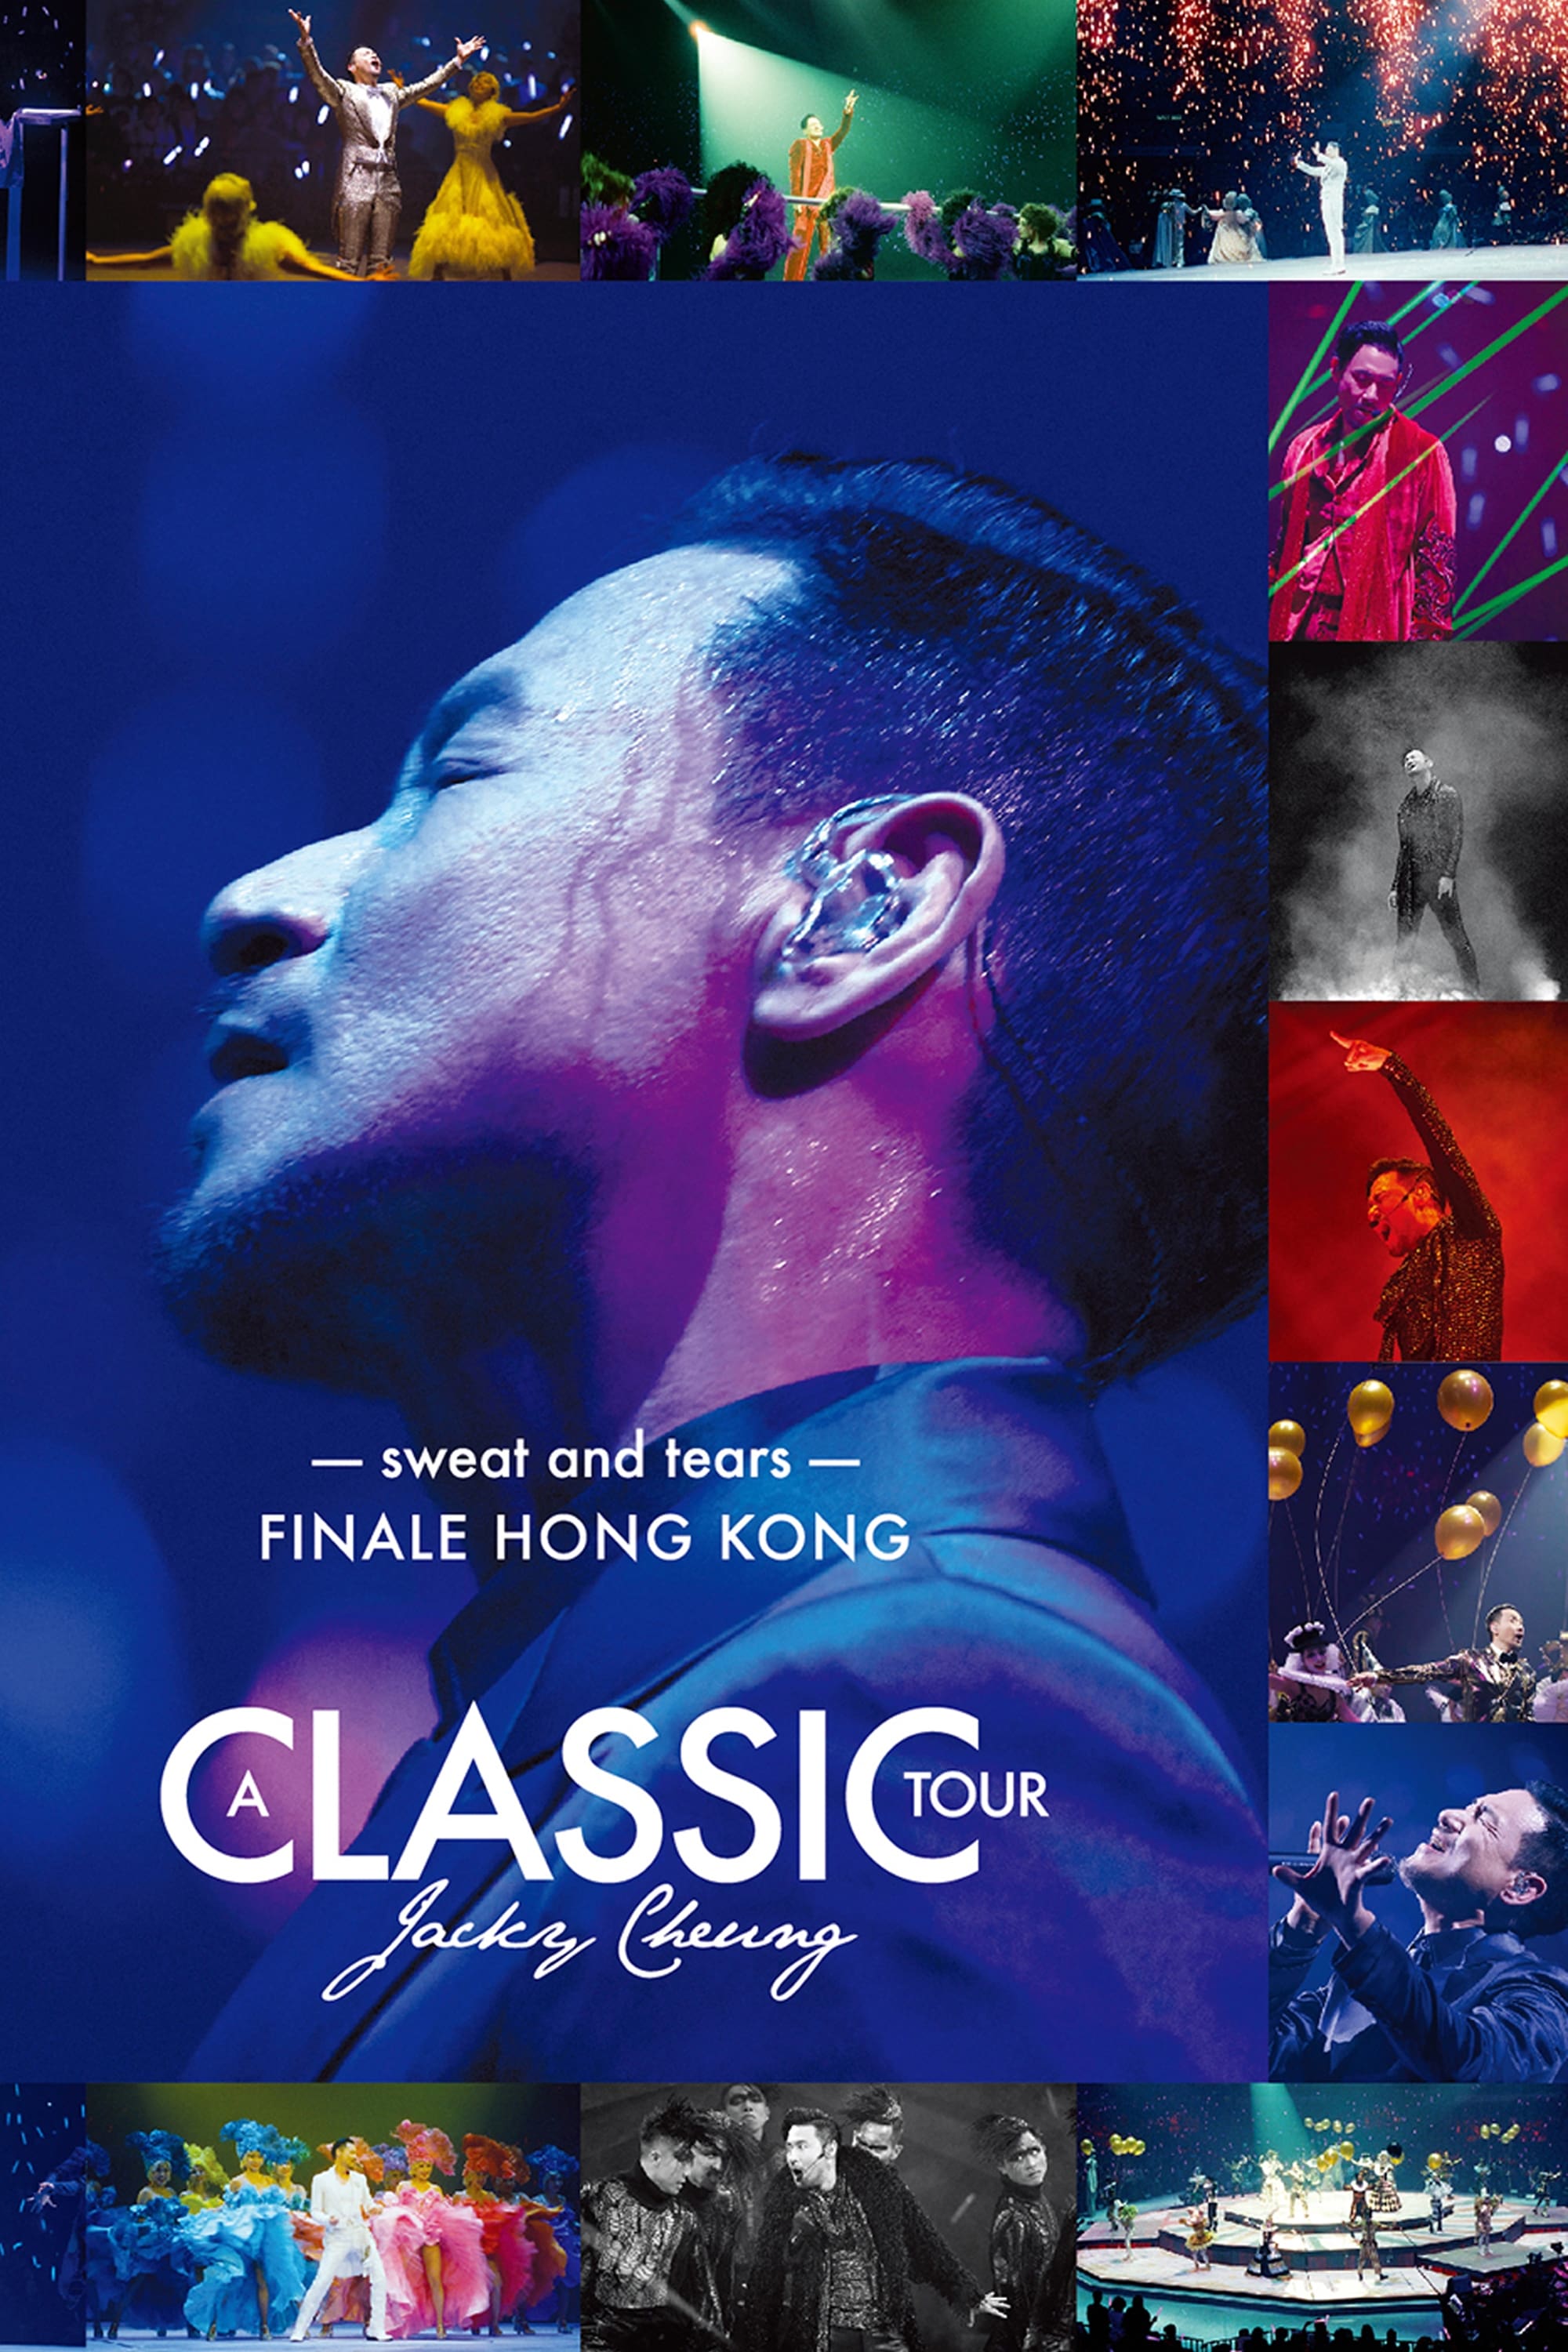 Jacky Cheung A Classic Tour Concert